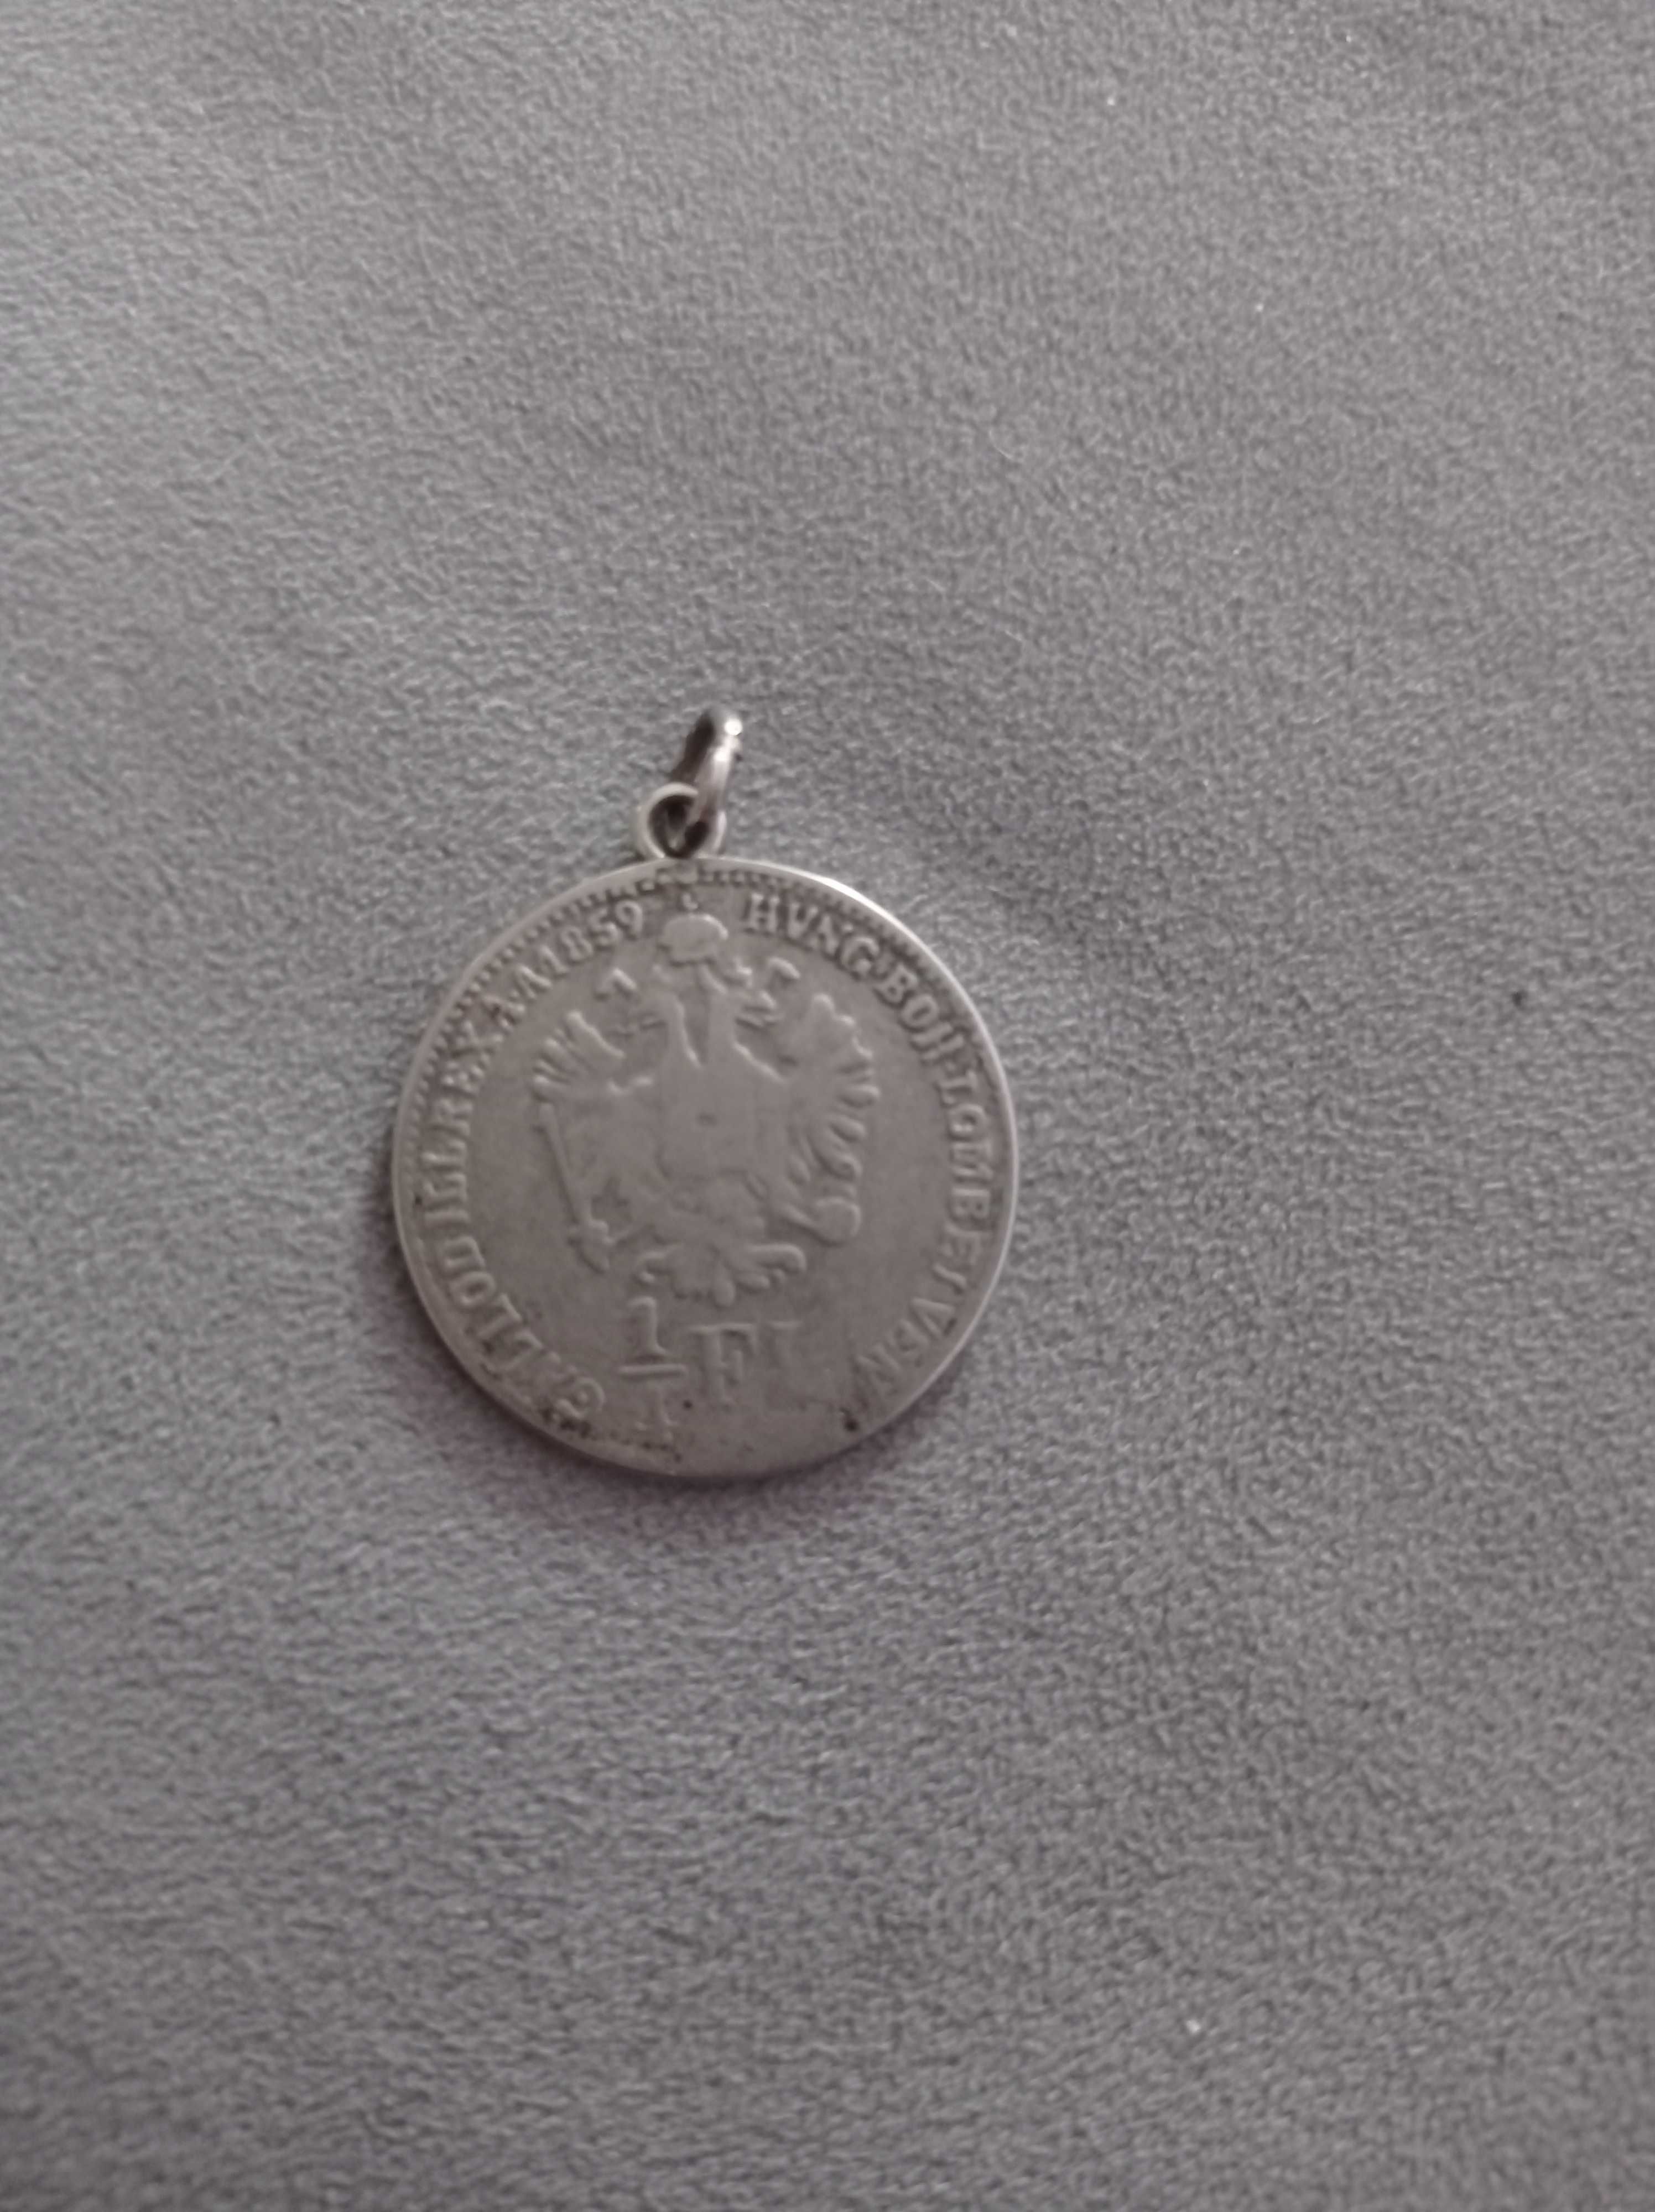 Stara moneta z zawieszka